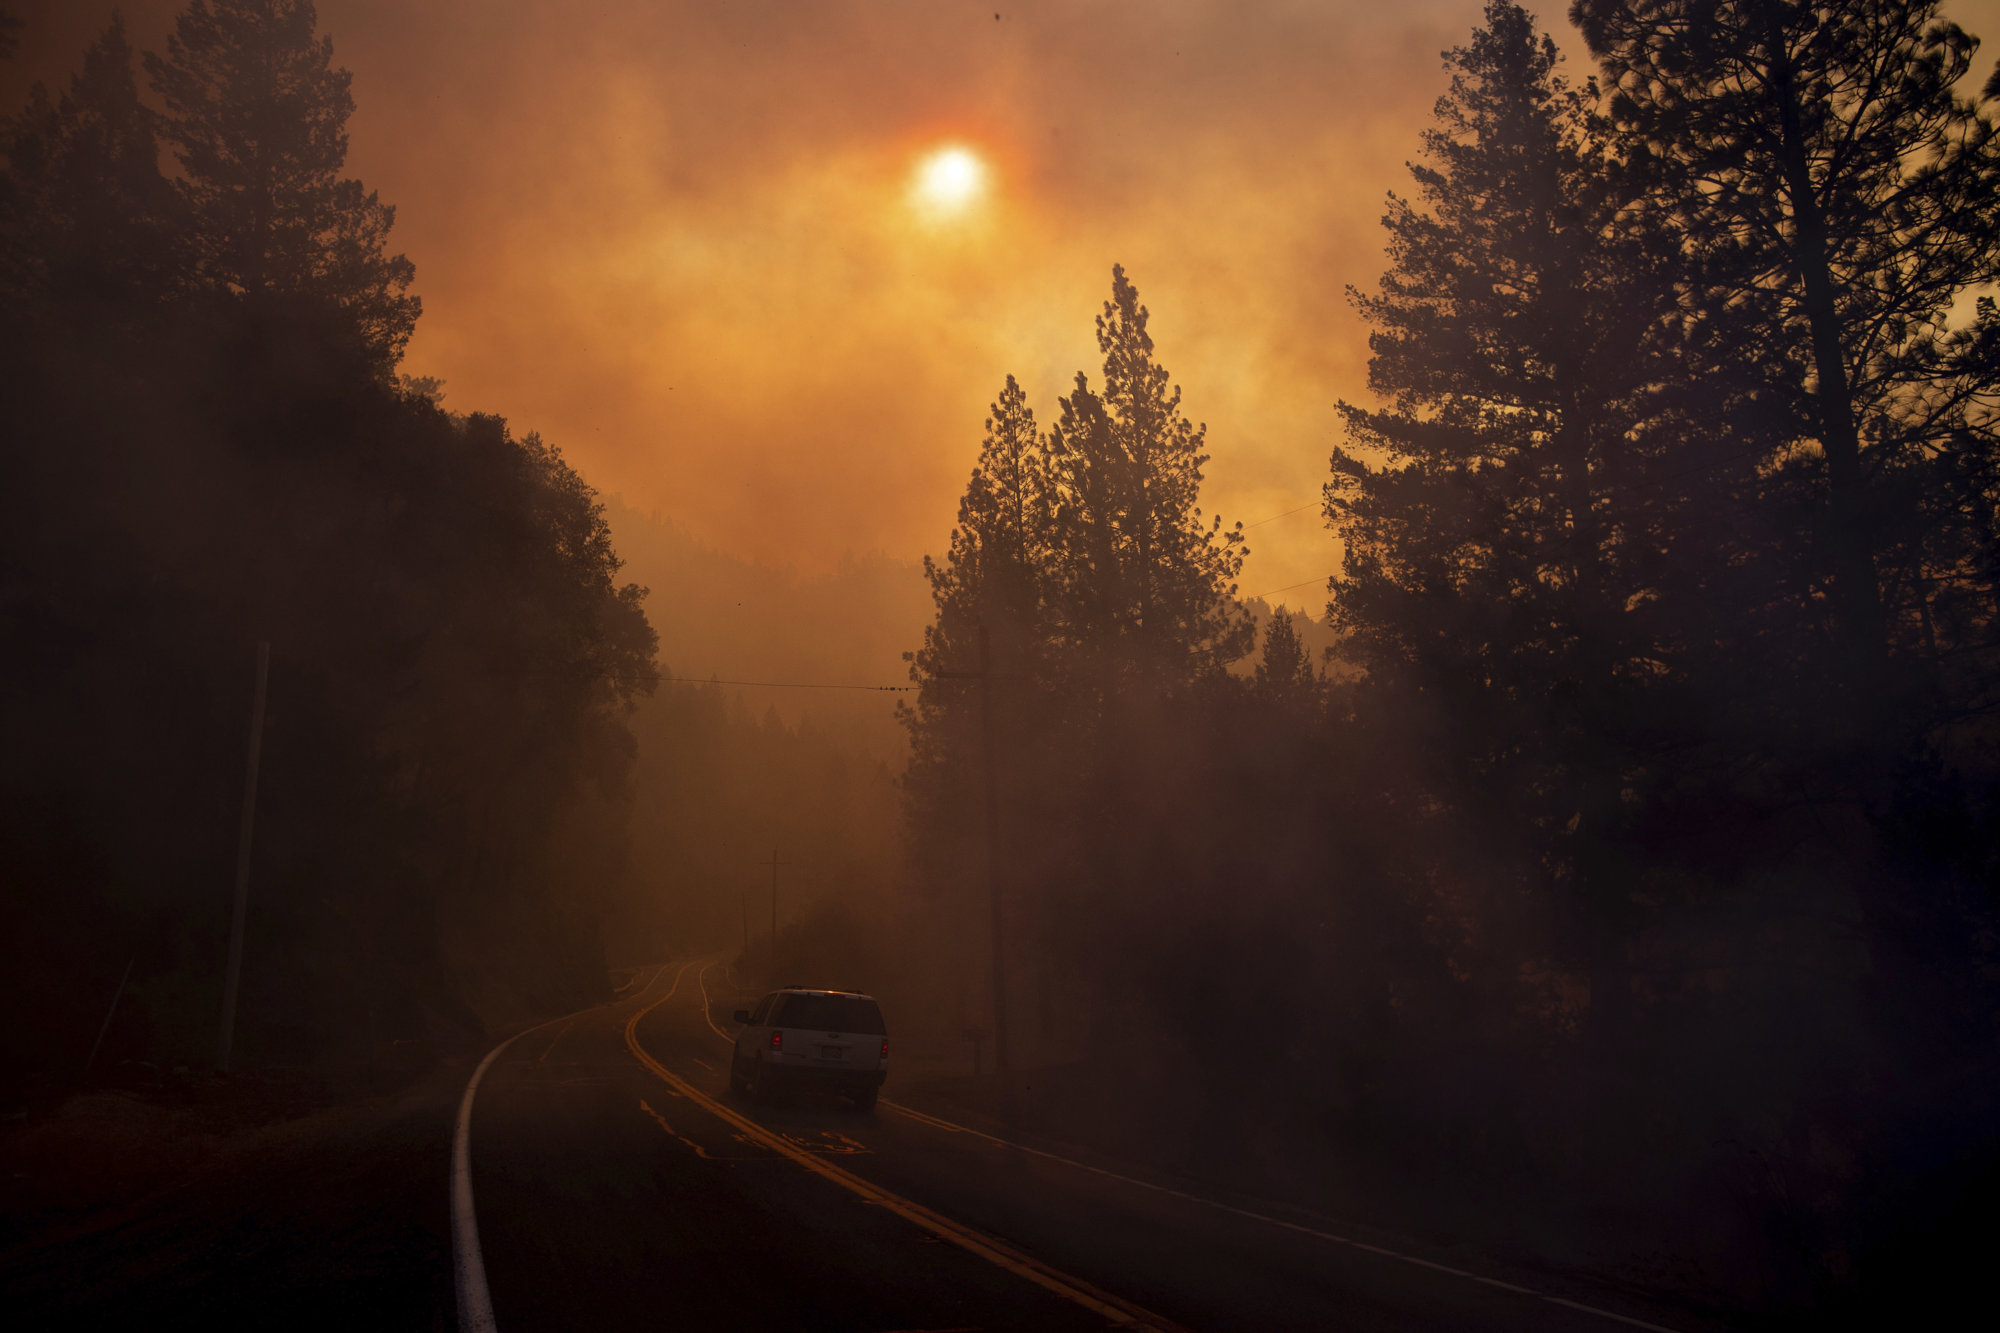 PHOTOS: Wildfires ravage California